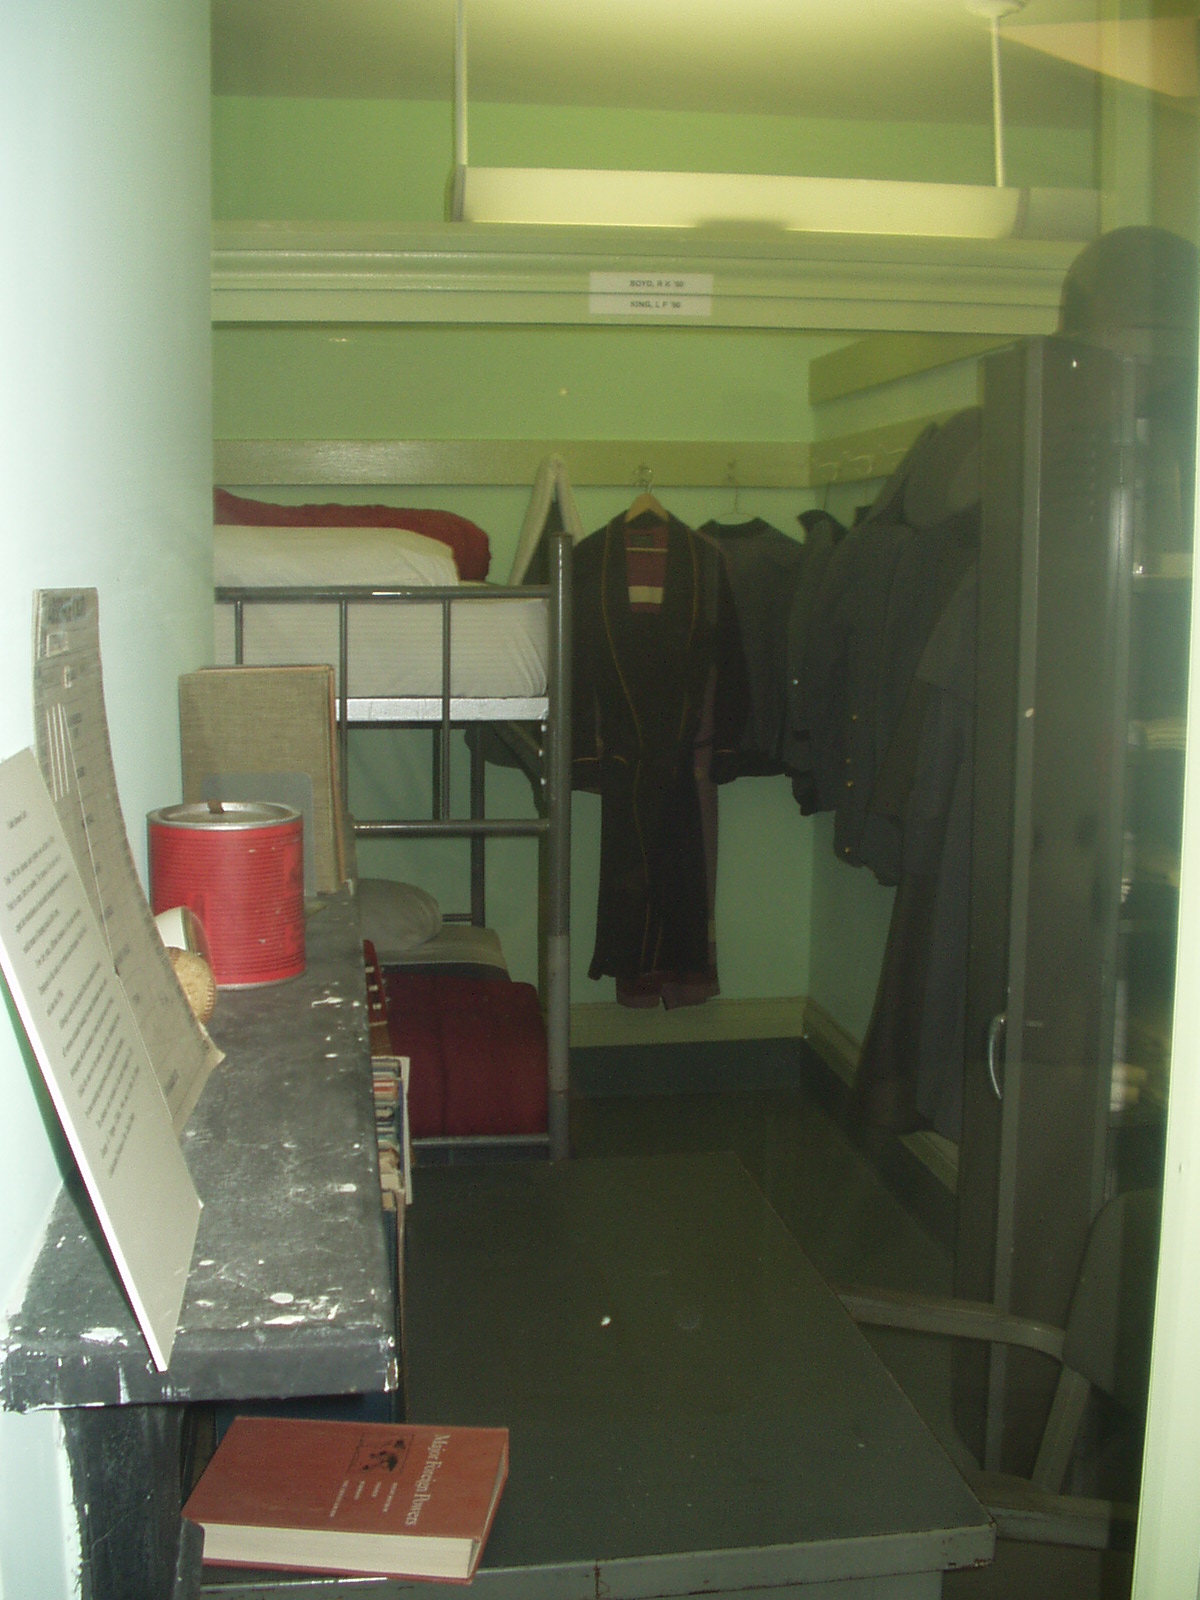 Ted's Cadet Room on Display